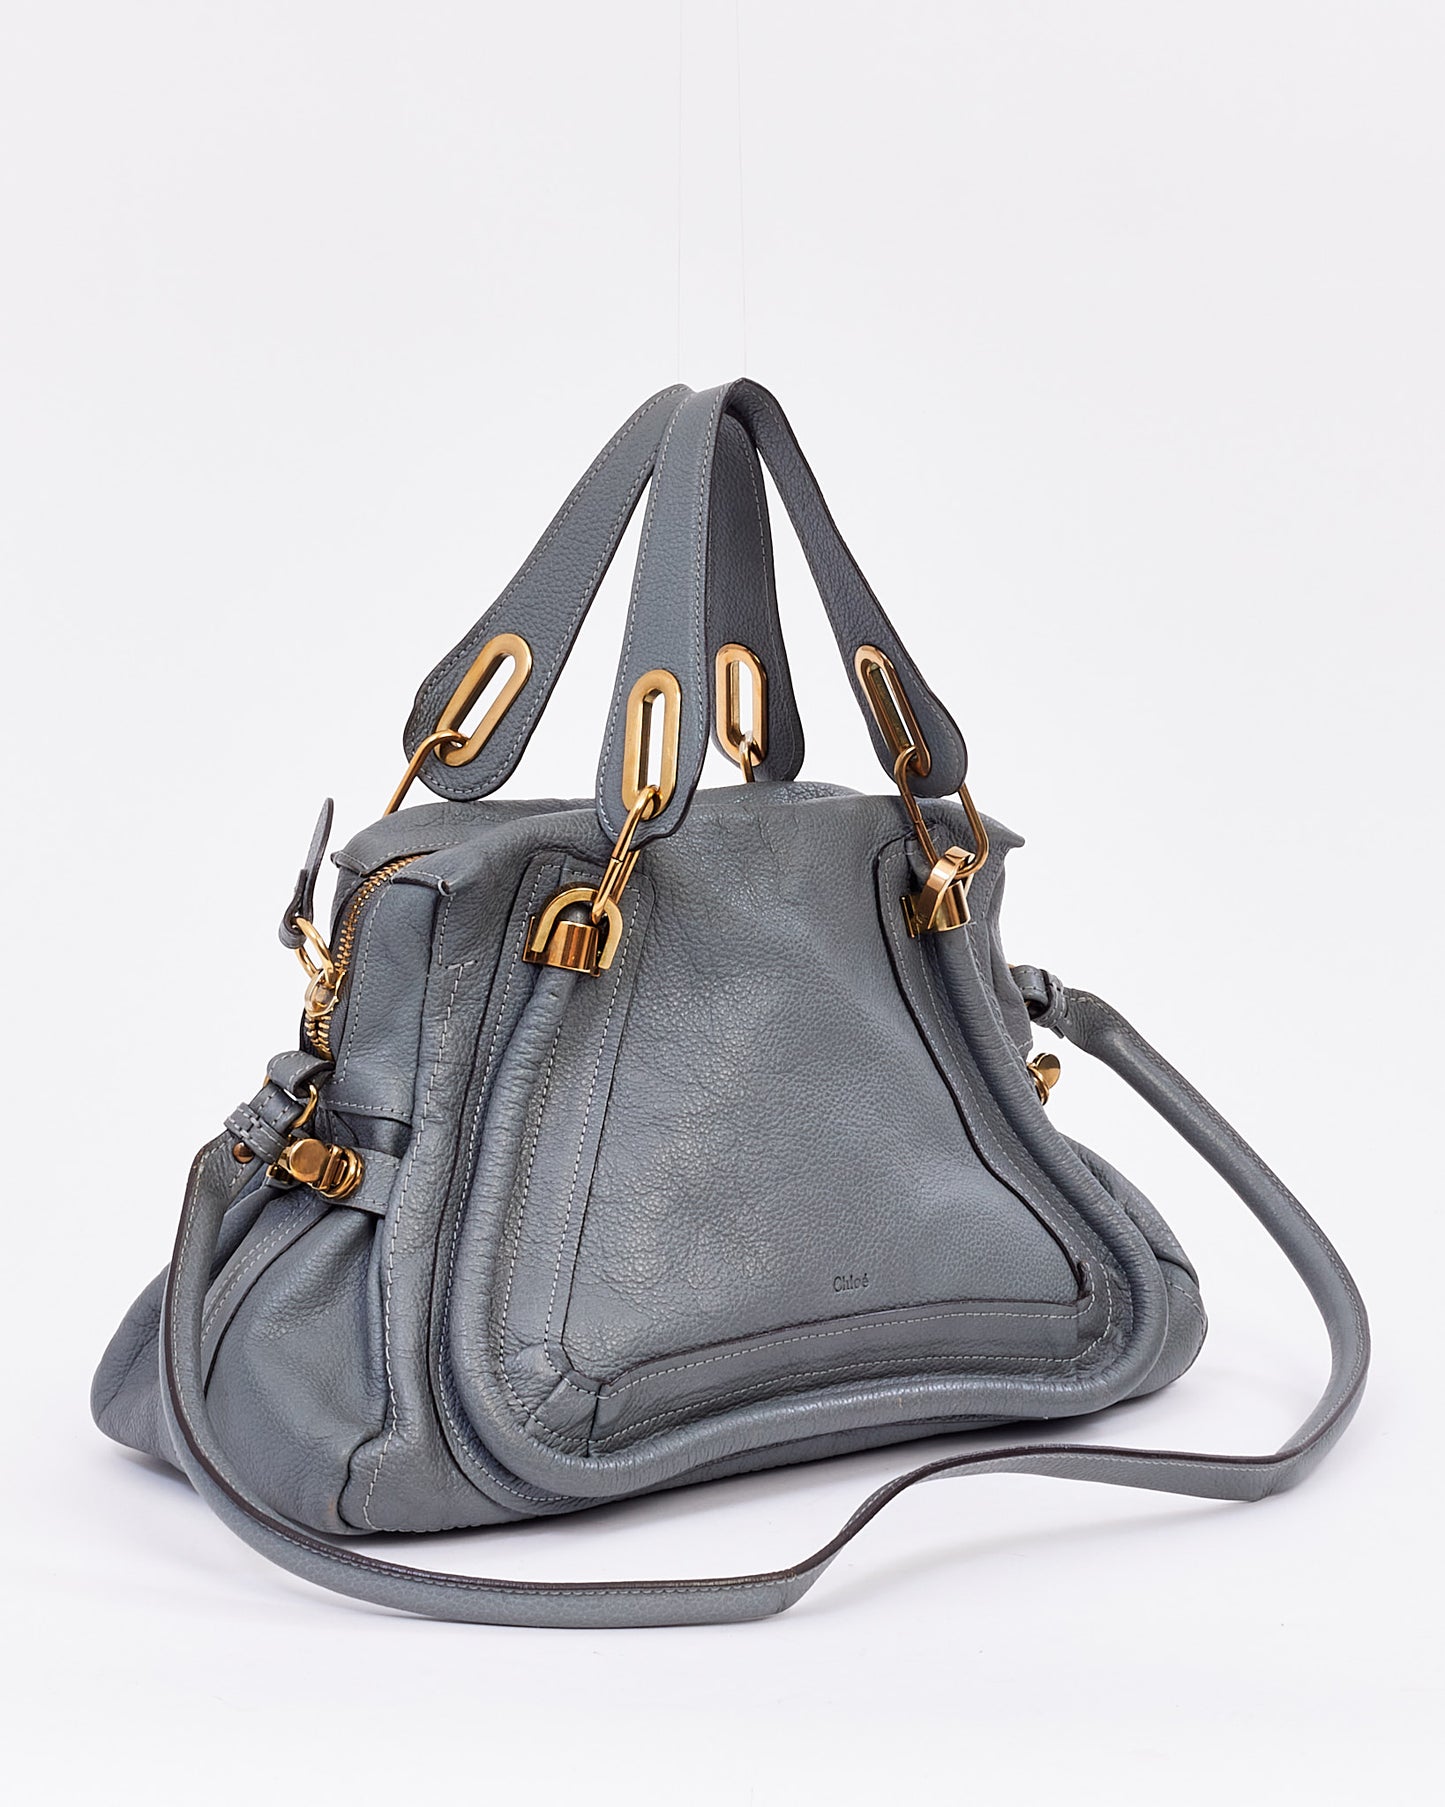 Chloé Light Grey Leather Paraty Bag